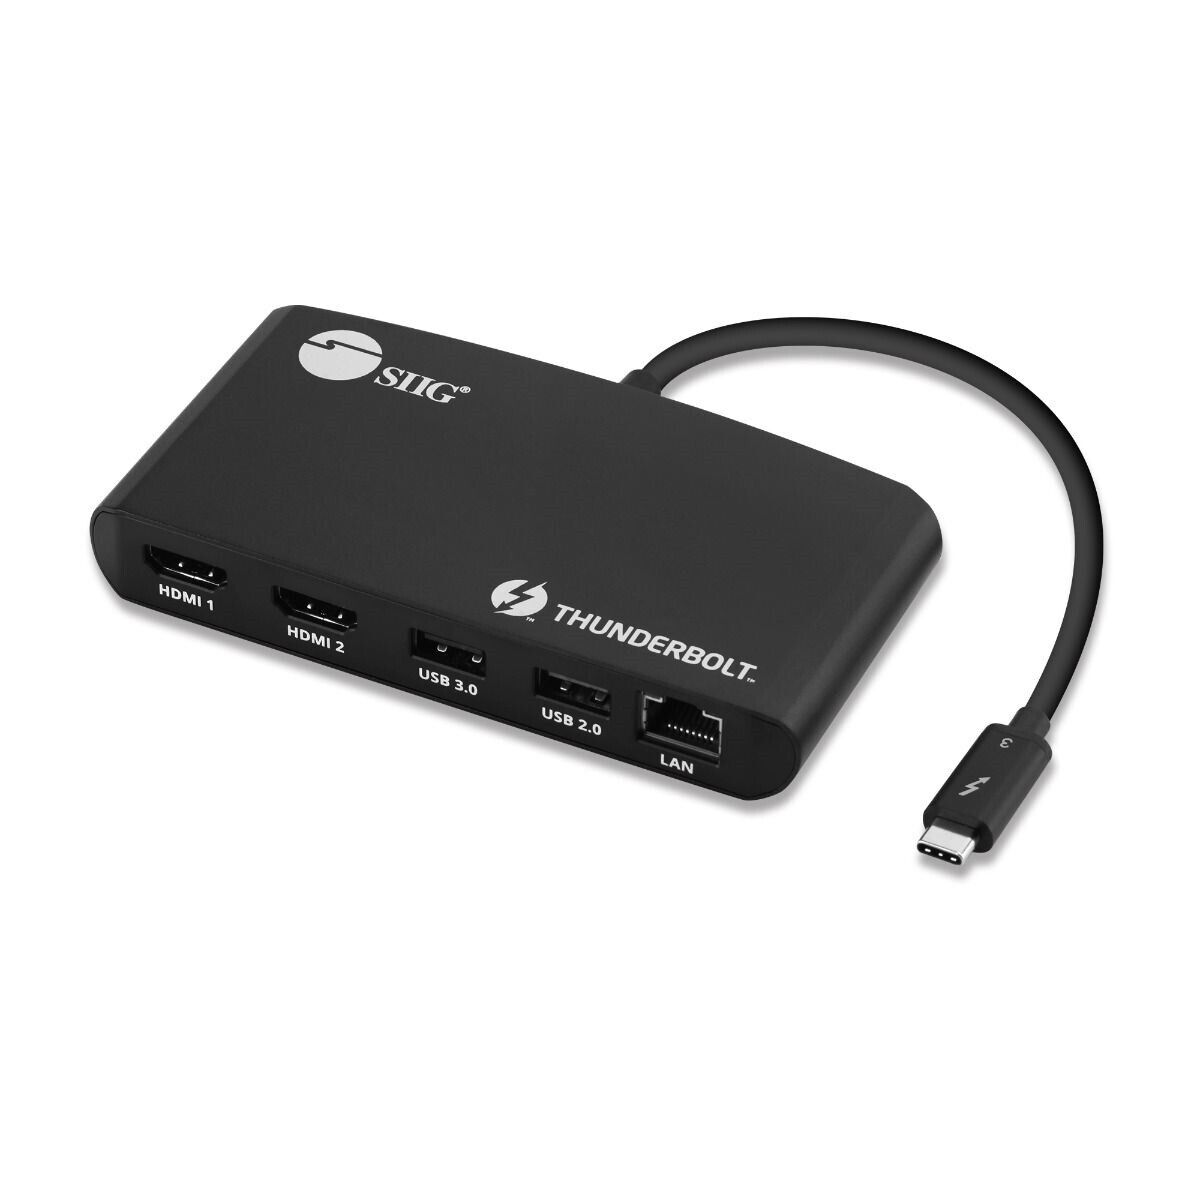 SIIG Thunderbolt 3 Dock (Dual 4K HDMI, USB 3.0, USB 2.0, Gigabit Ethernet